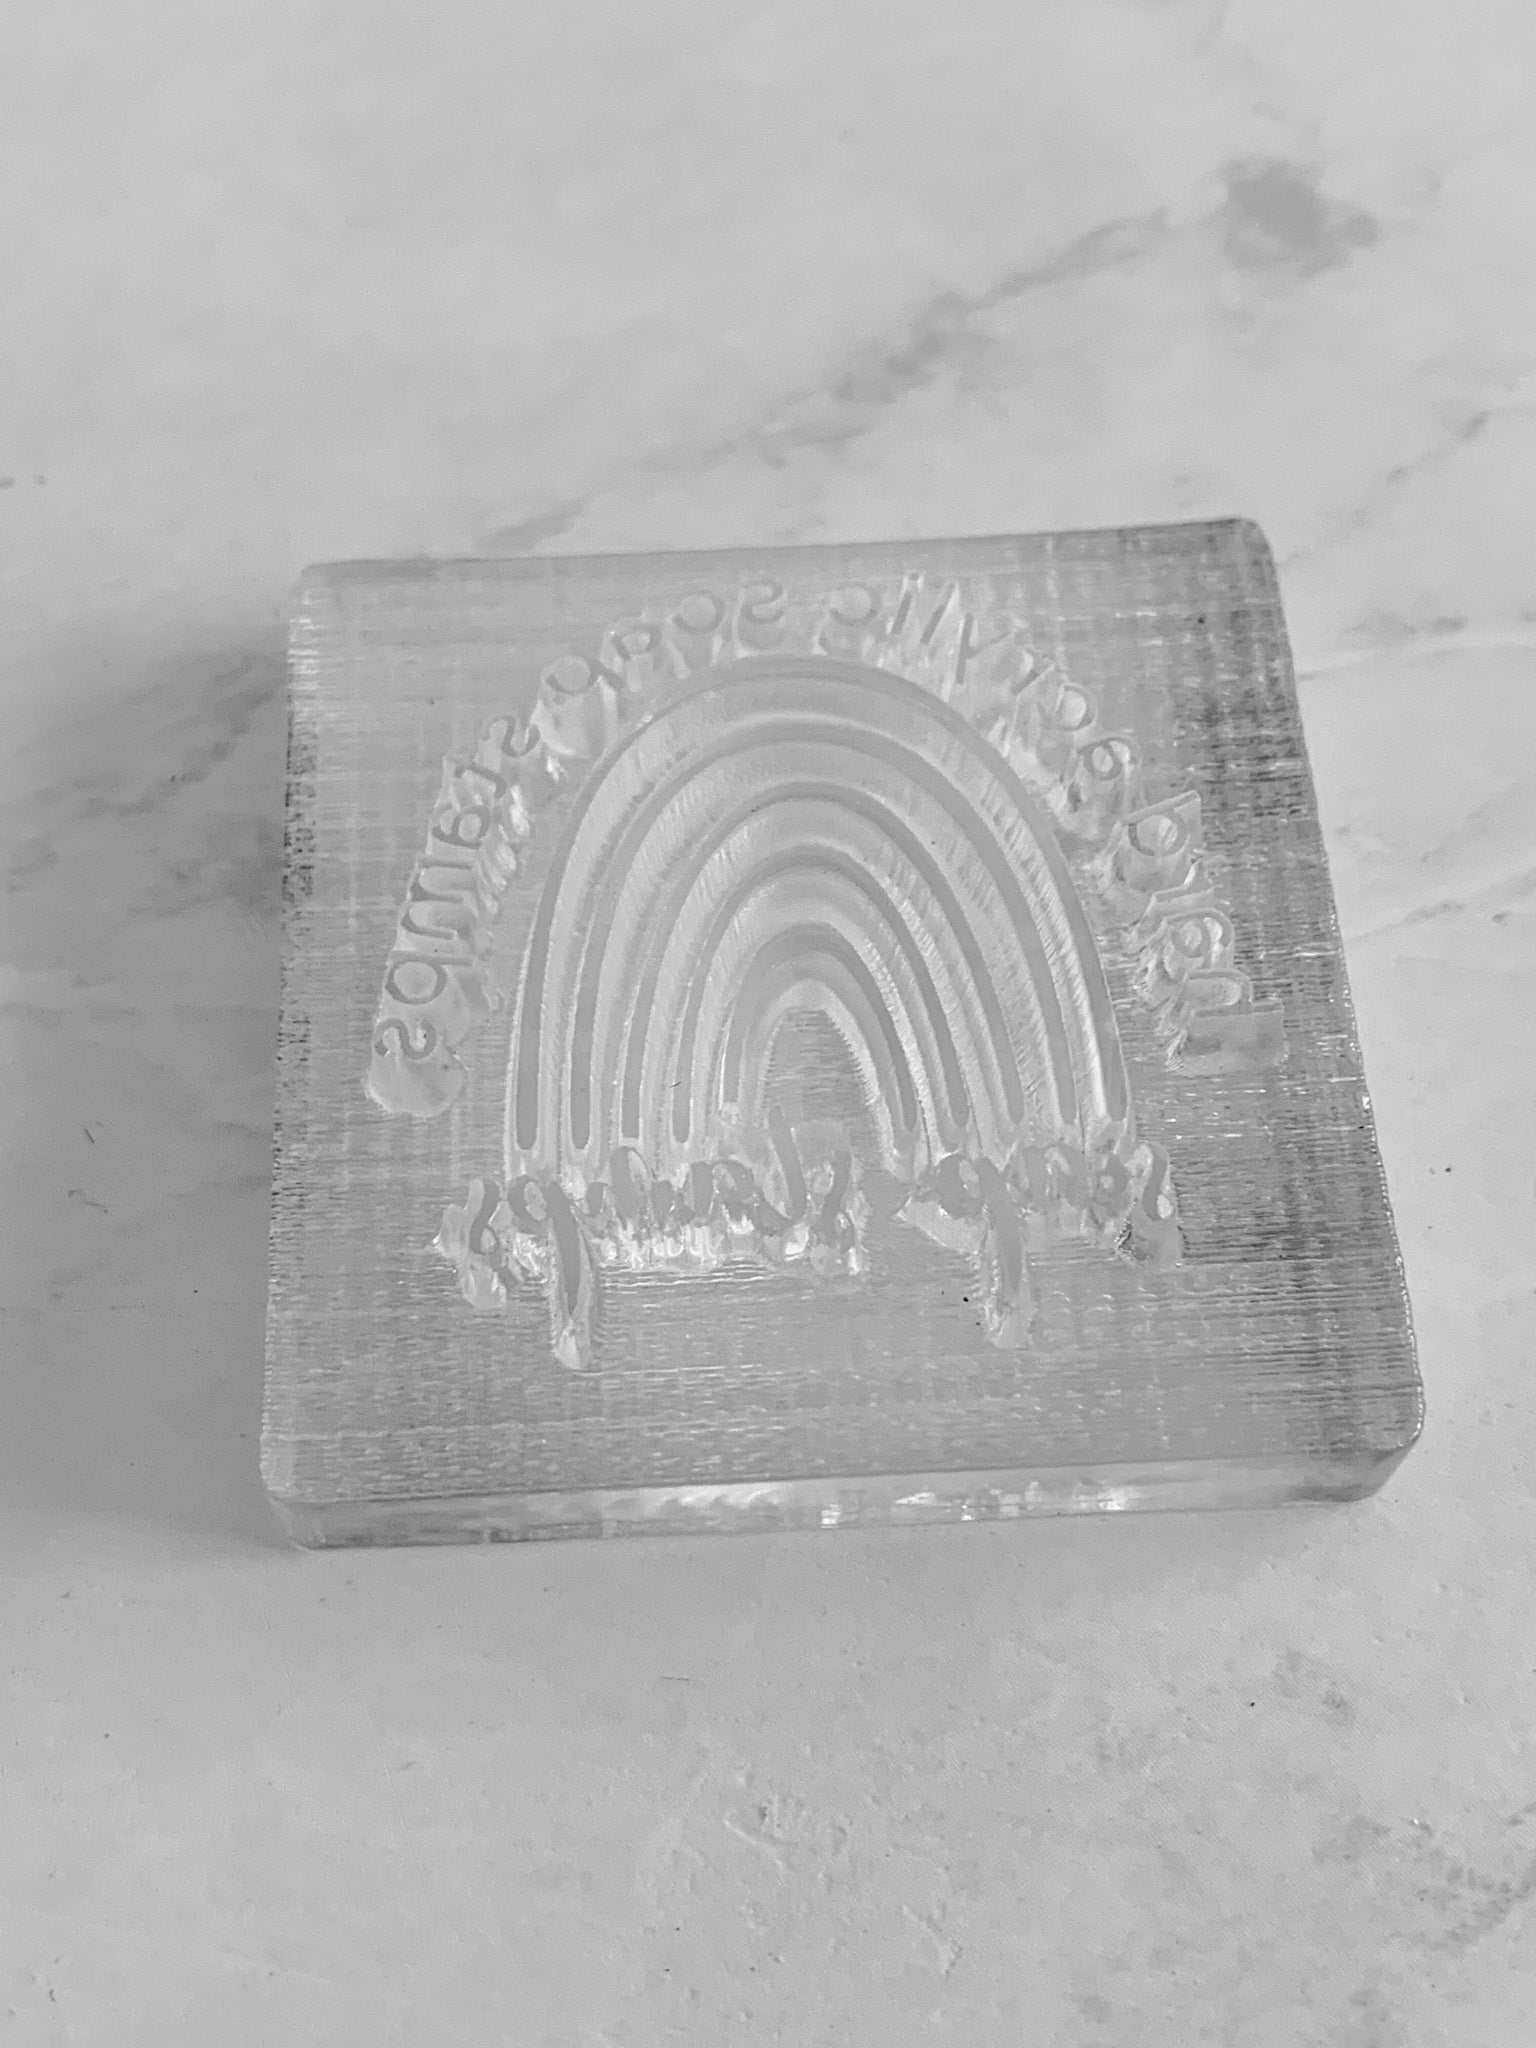 Acrylic Block Soap Dish